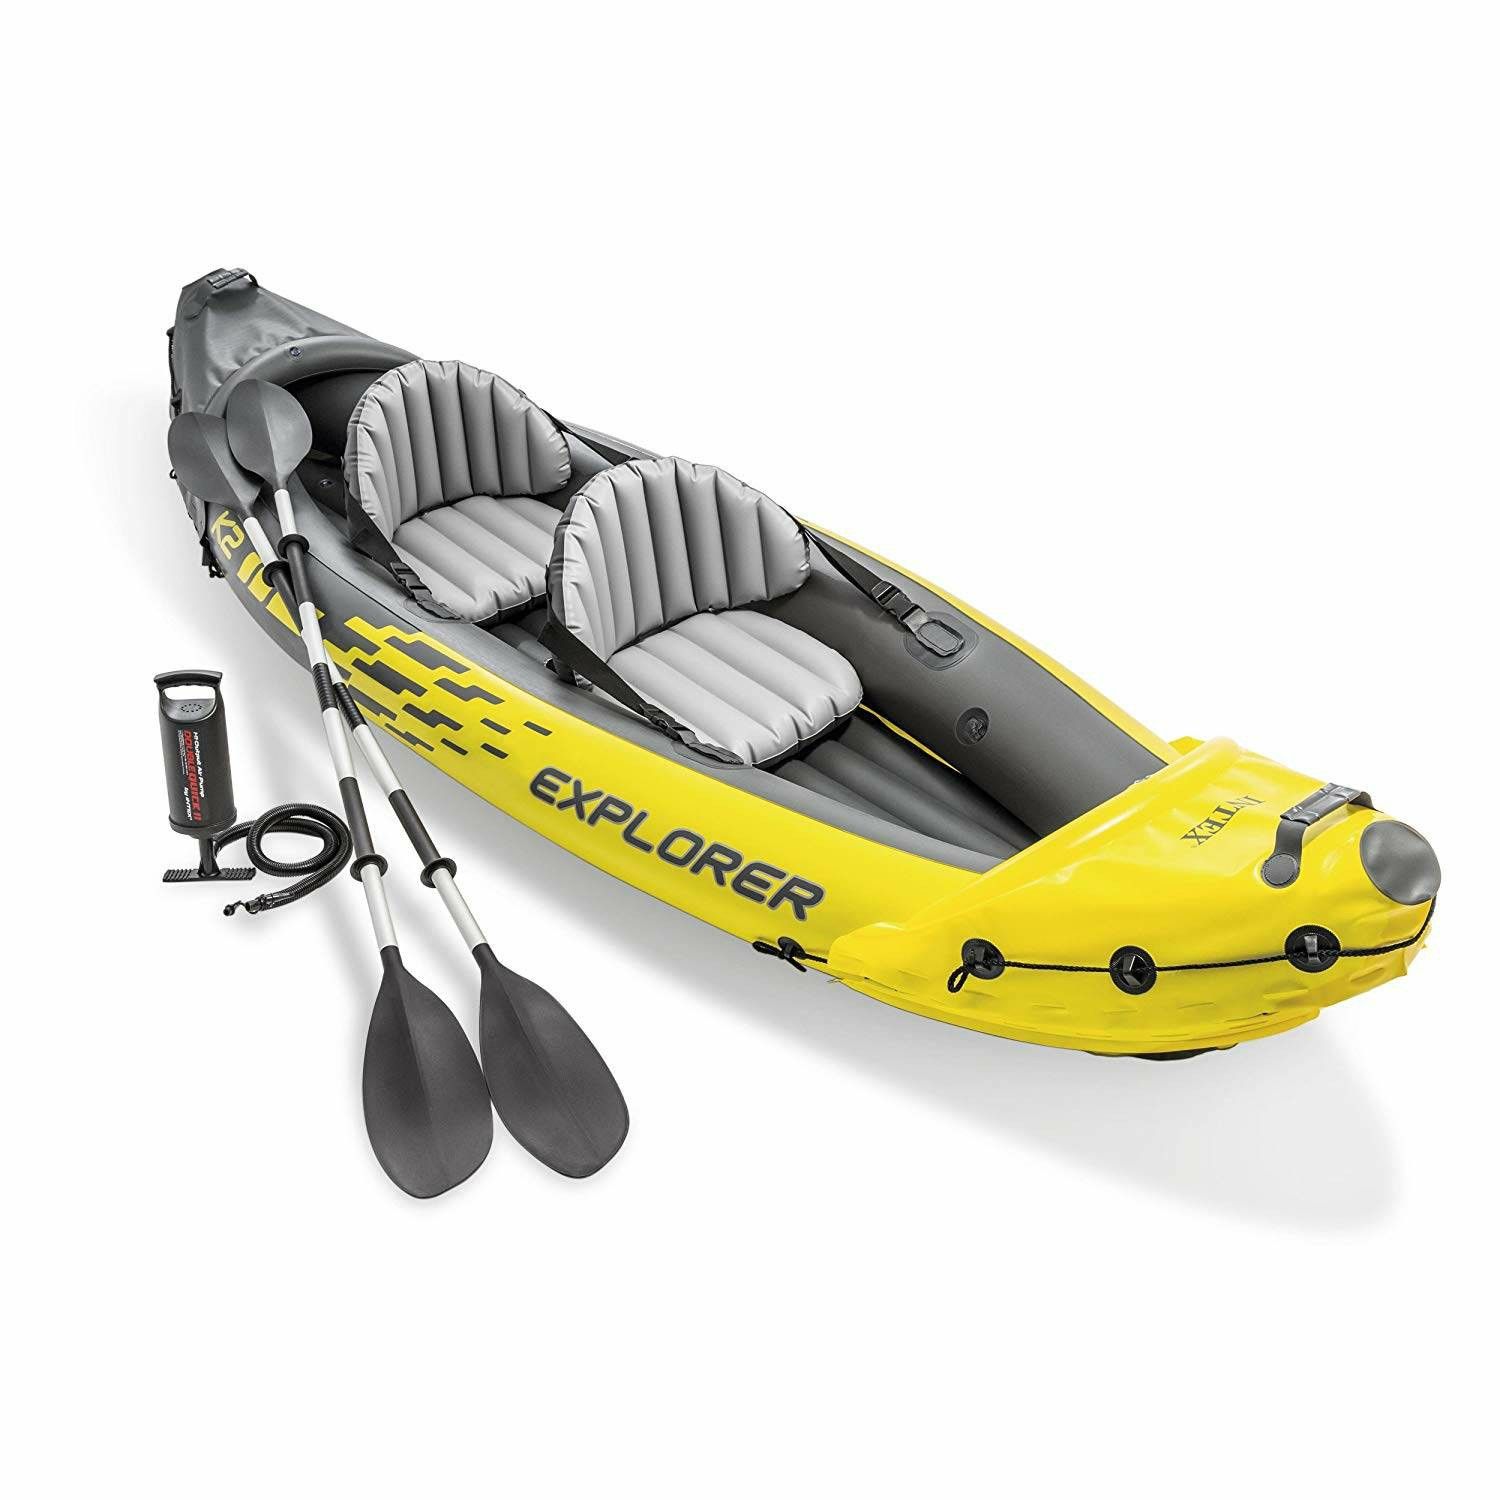 BRAND NEW Intex Explorer K2 Kayak, 2-Person Inflatable Kayak Set with Aluminum Oars and High Output Air Pump